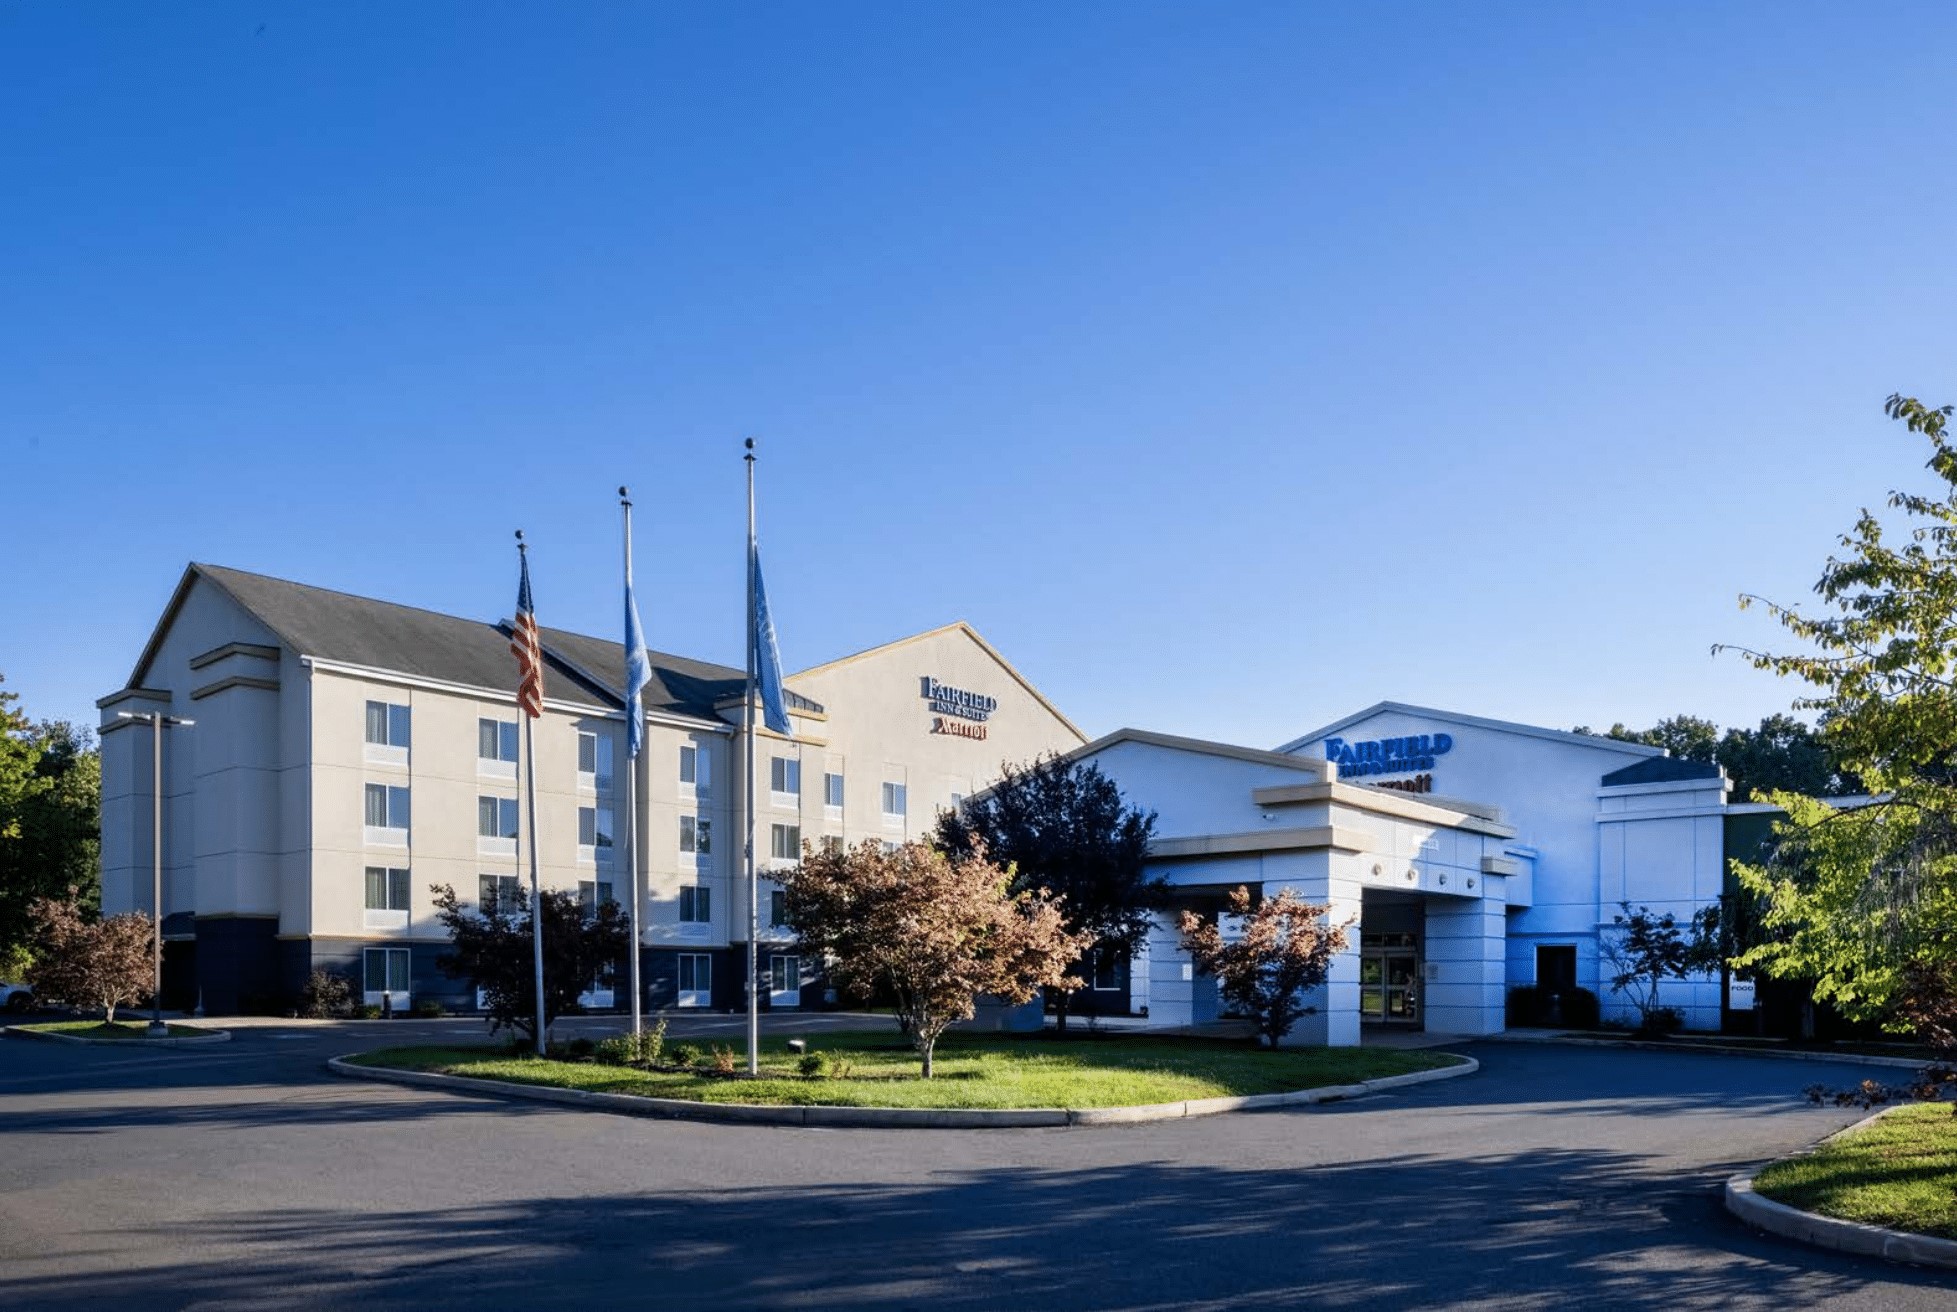 Fairfield Inn & Suites – Plainville In the News